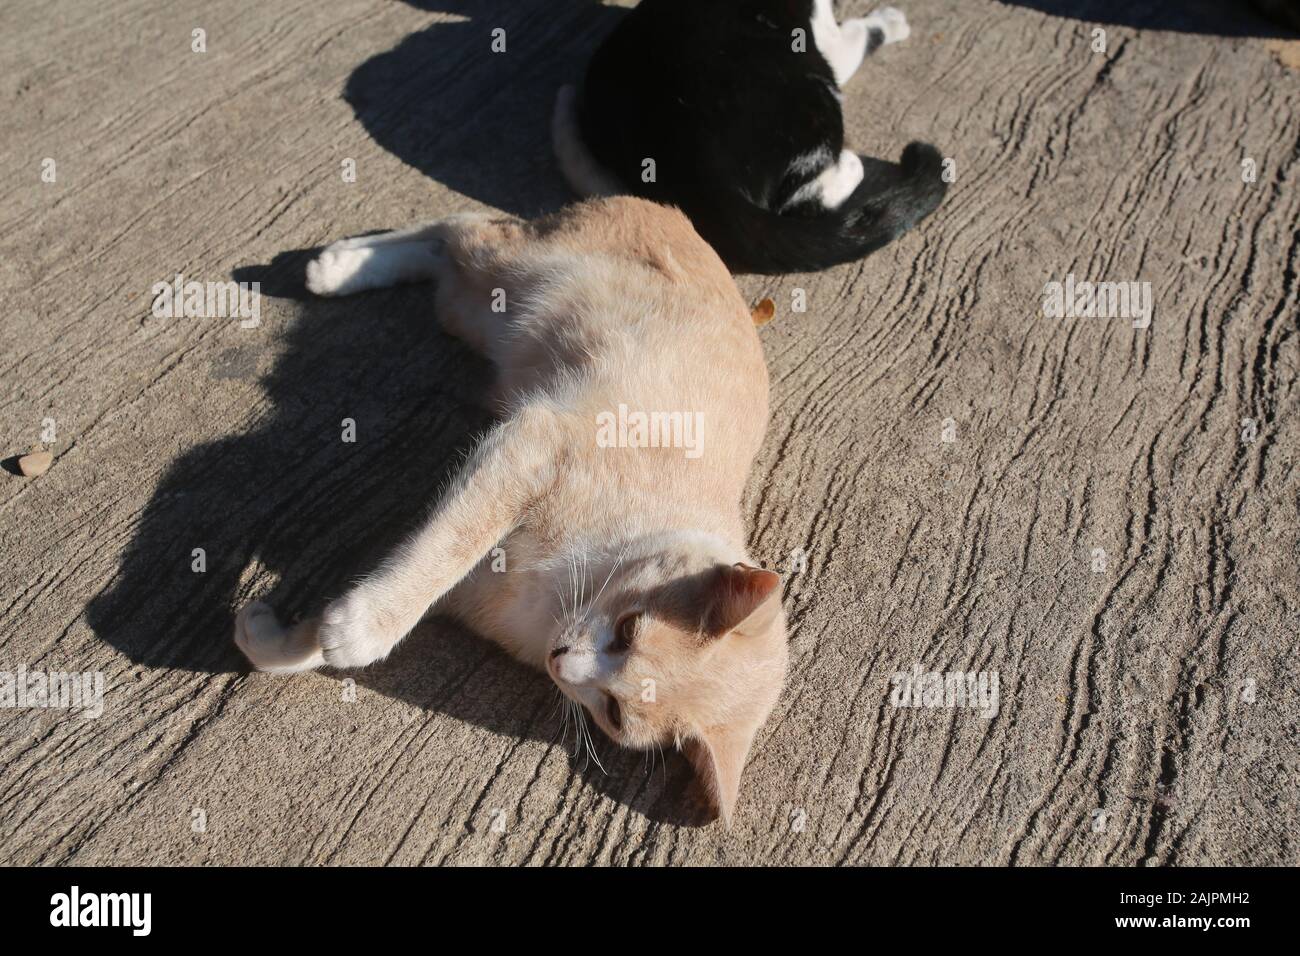 street cat in sun bathing Stock Photo